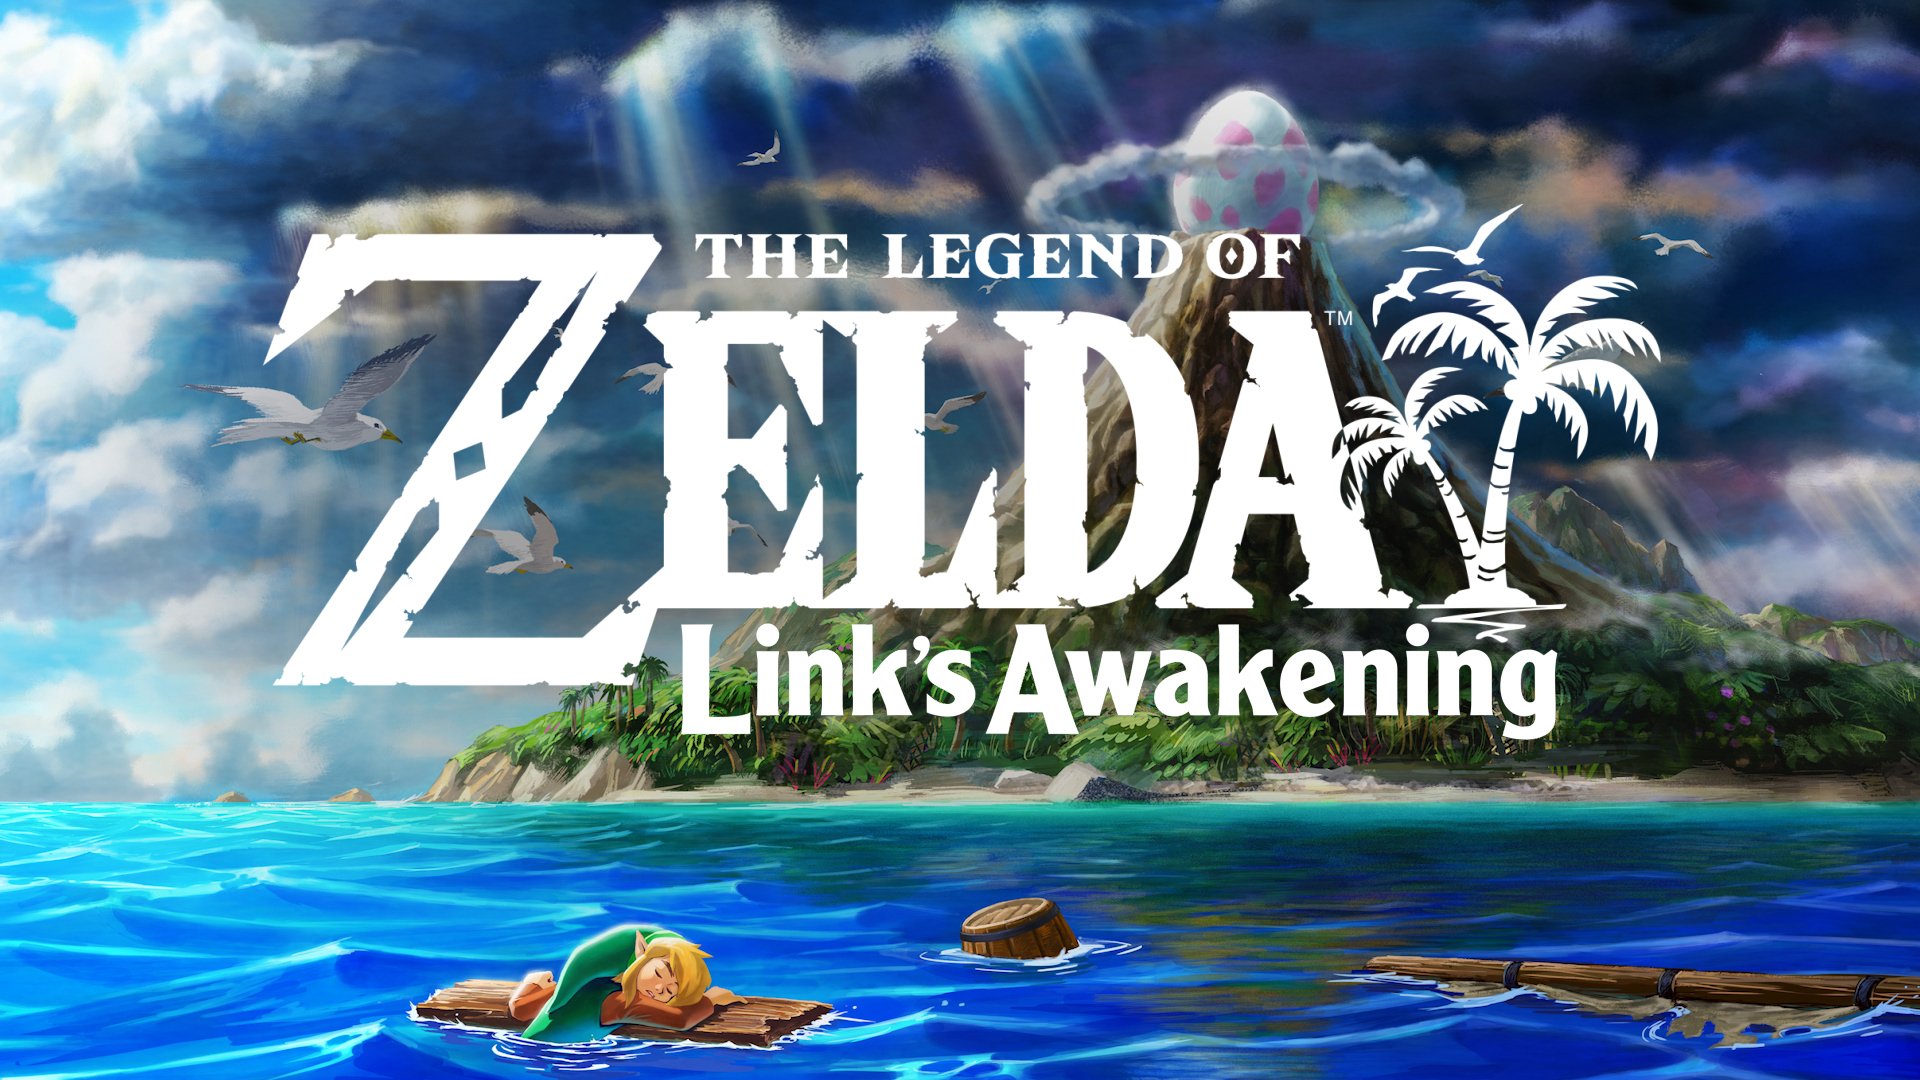 Nintendo reimagines a Zelda classic with Link's Awakening for the